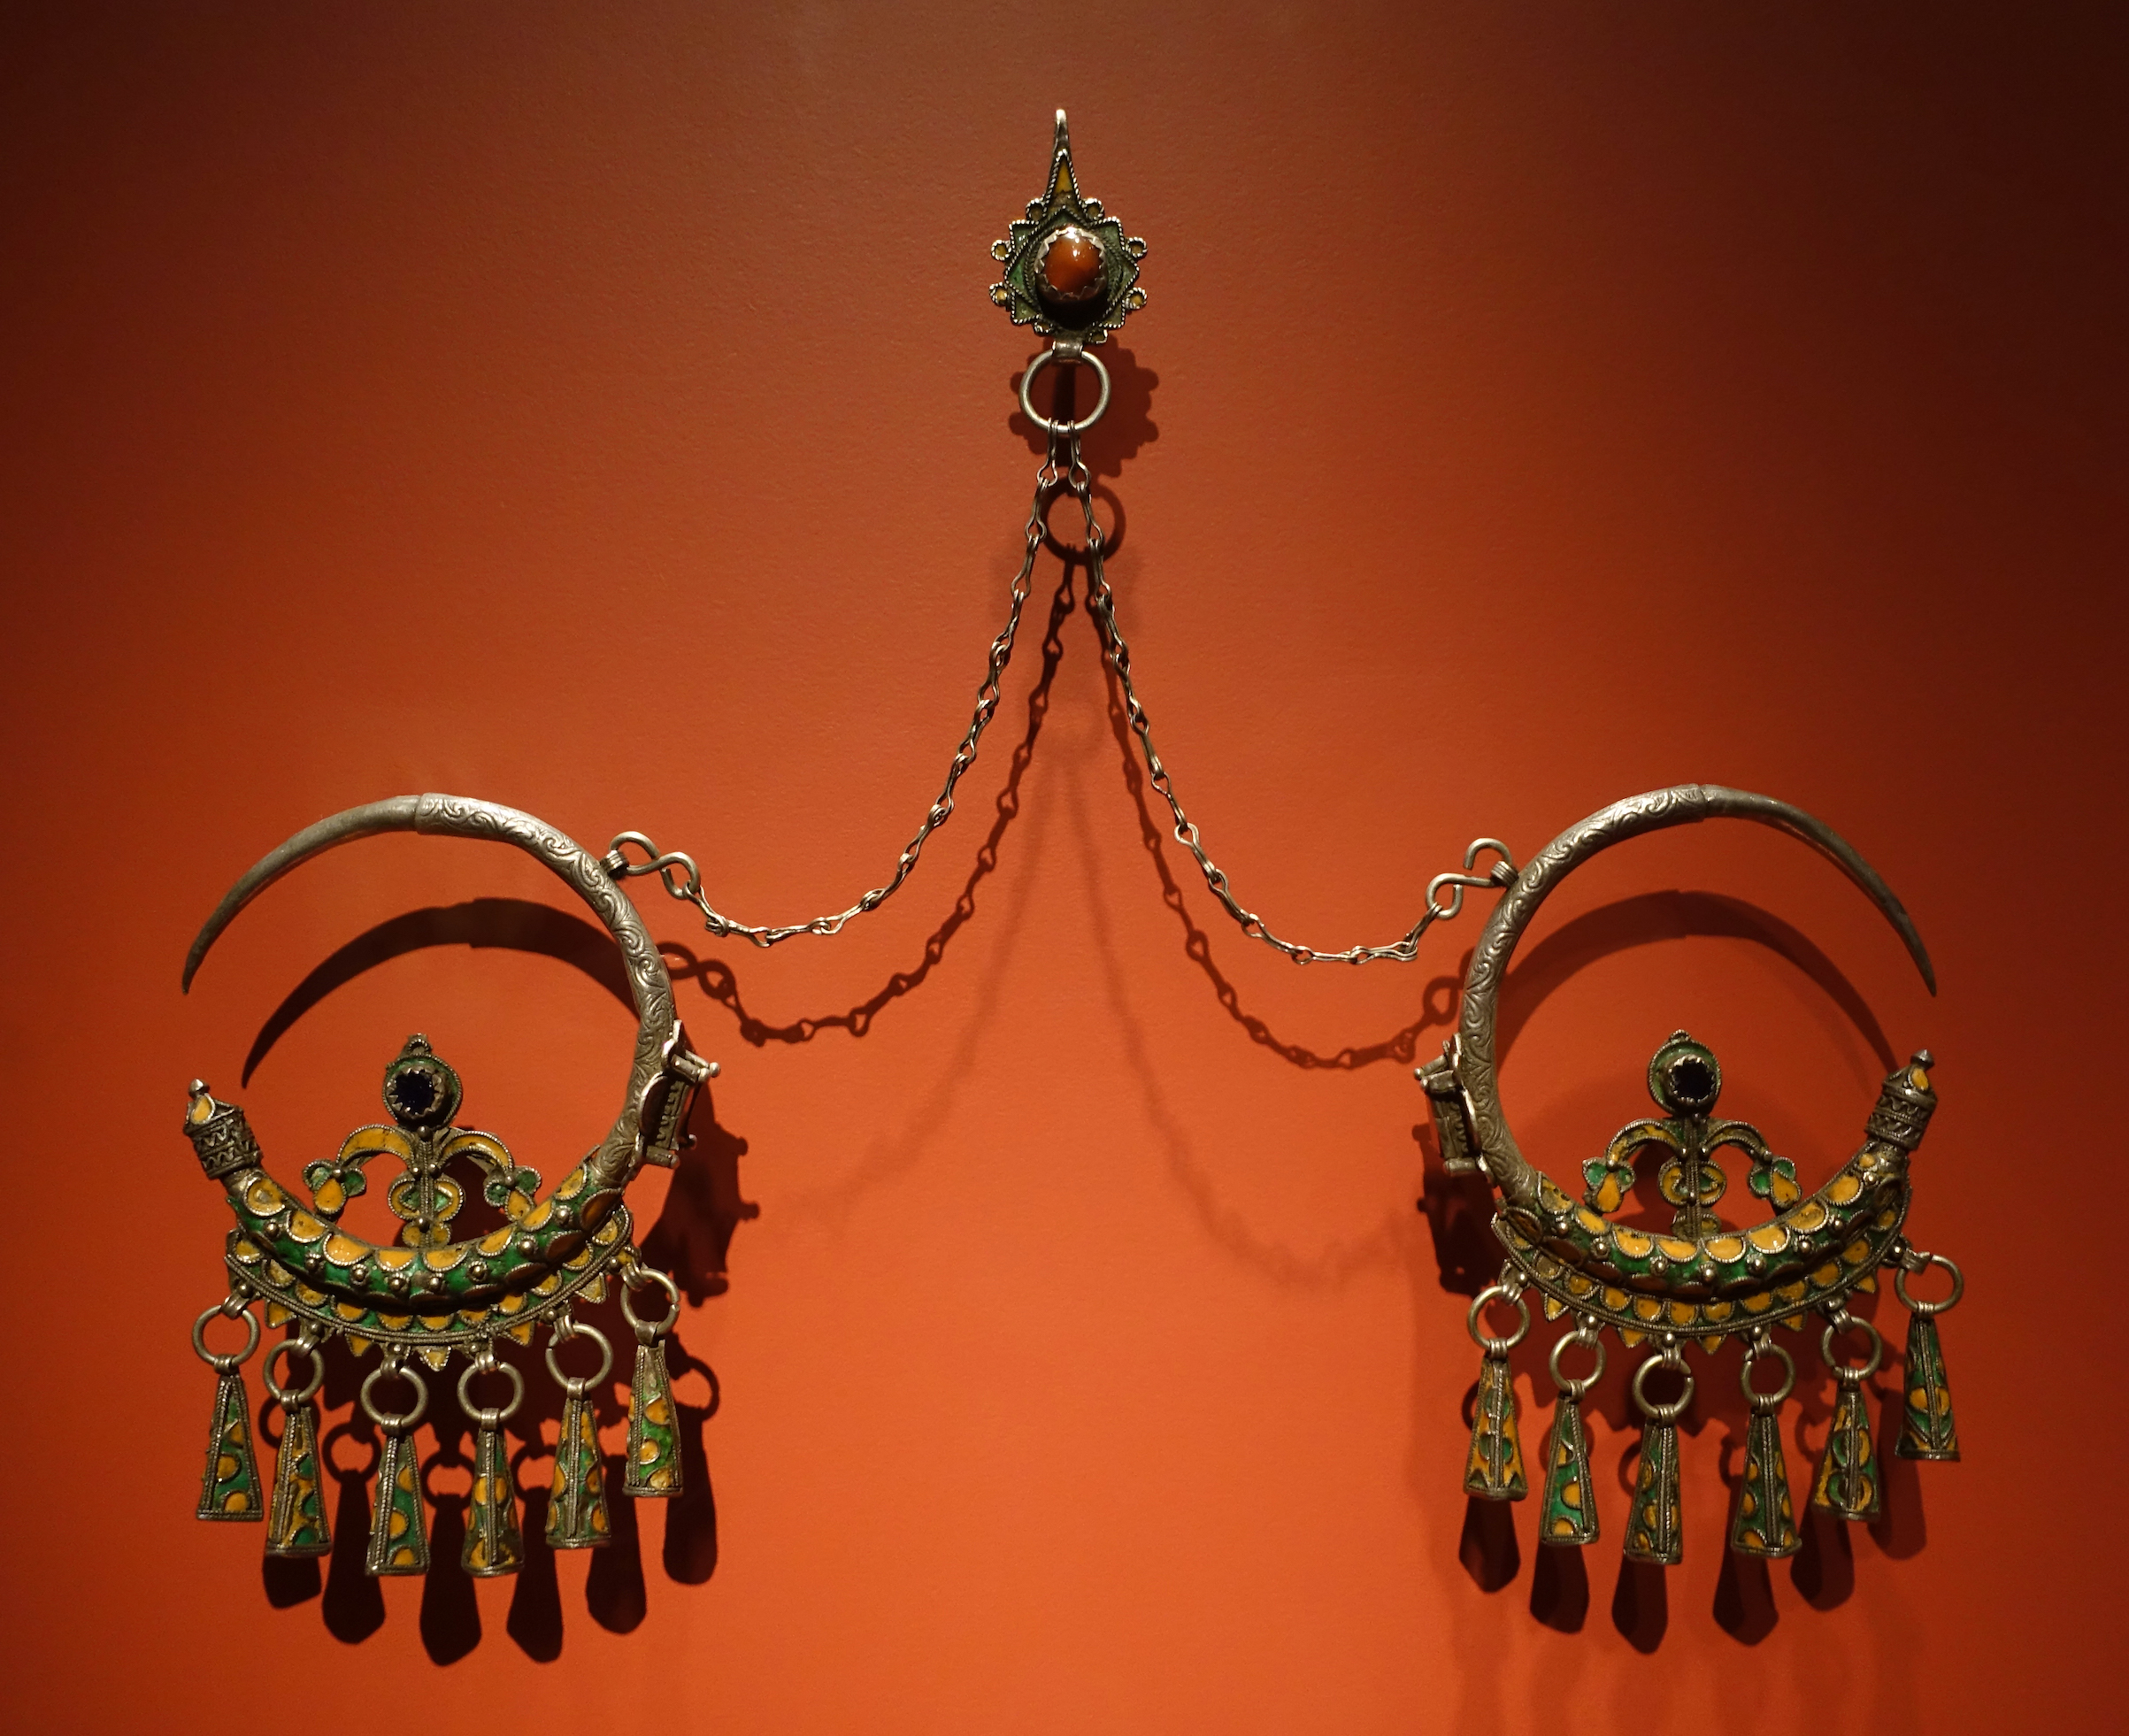 Amazigh ear pendants, early 20th century (Anti-Atlas Region, Morocco), silver alloy, enamel, glass, and carnelian, 34.4 x 20.3 x 2.9 cm (Smithsonian National Museum of African Art, Washington, D.C.)